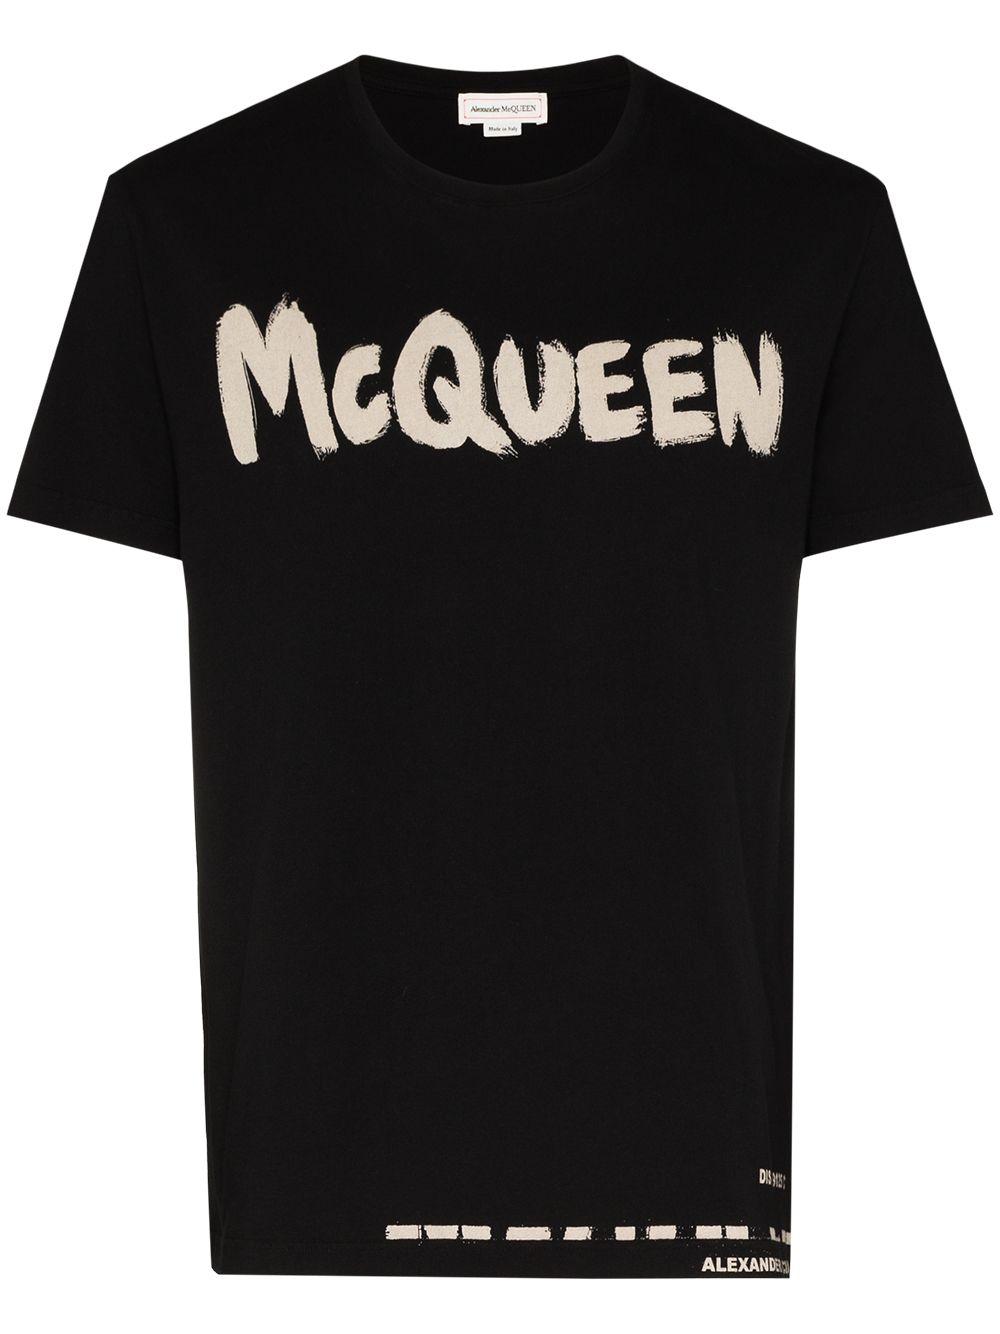 Alexander McQueen Graffiti Logo T-shirt in Black for Men - Lyst